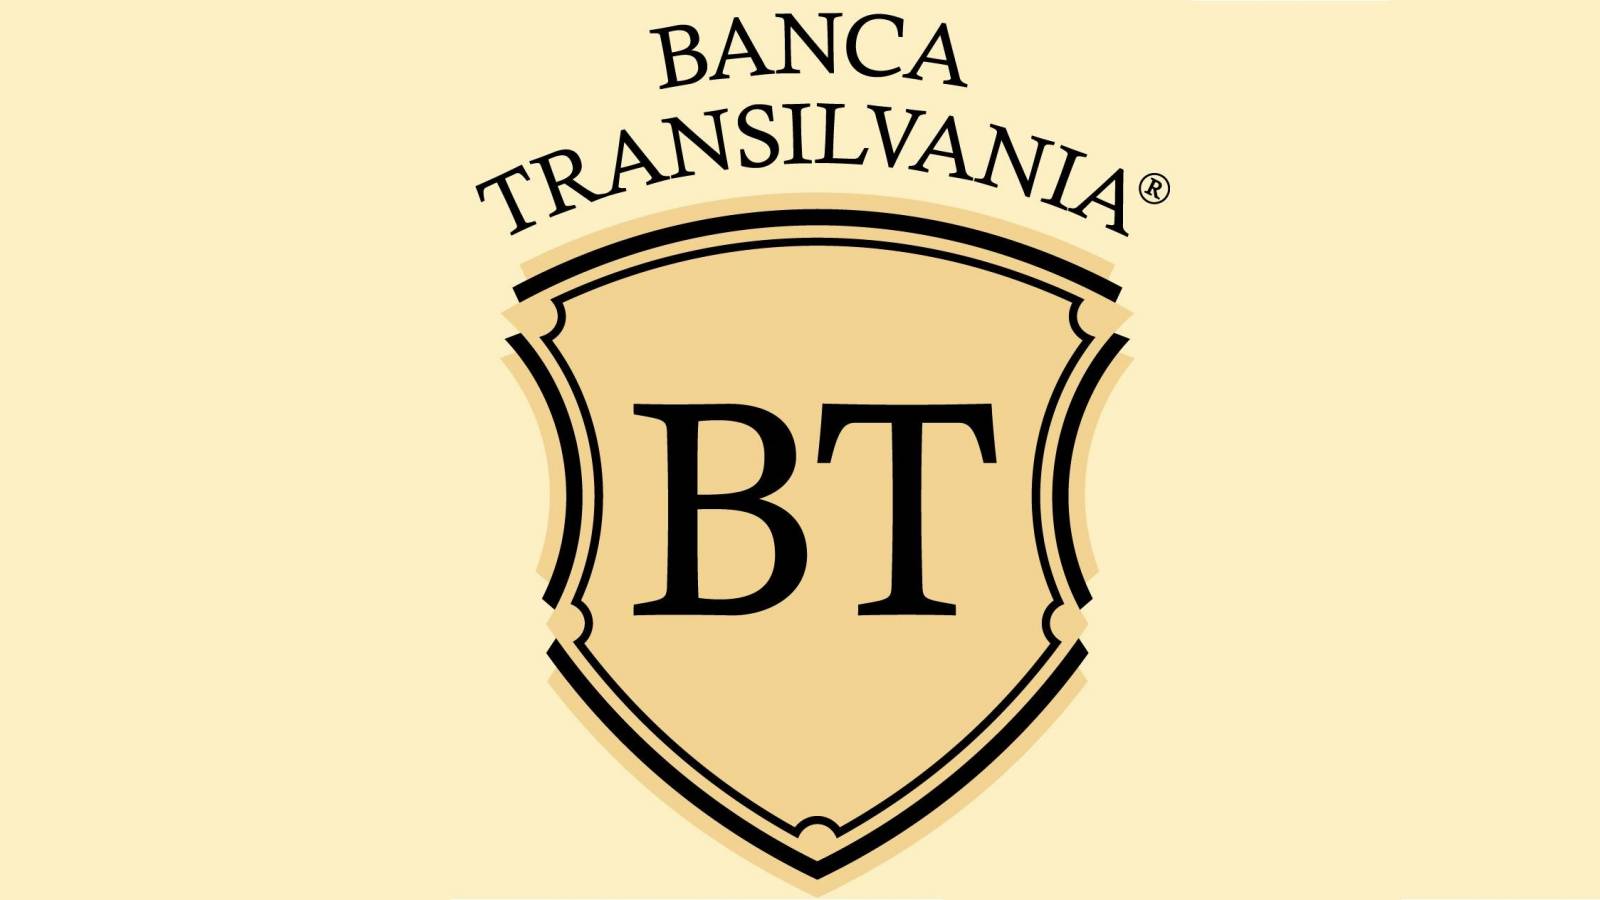 BANCA Transilvania directly